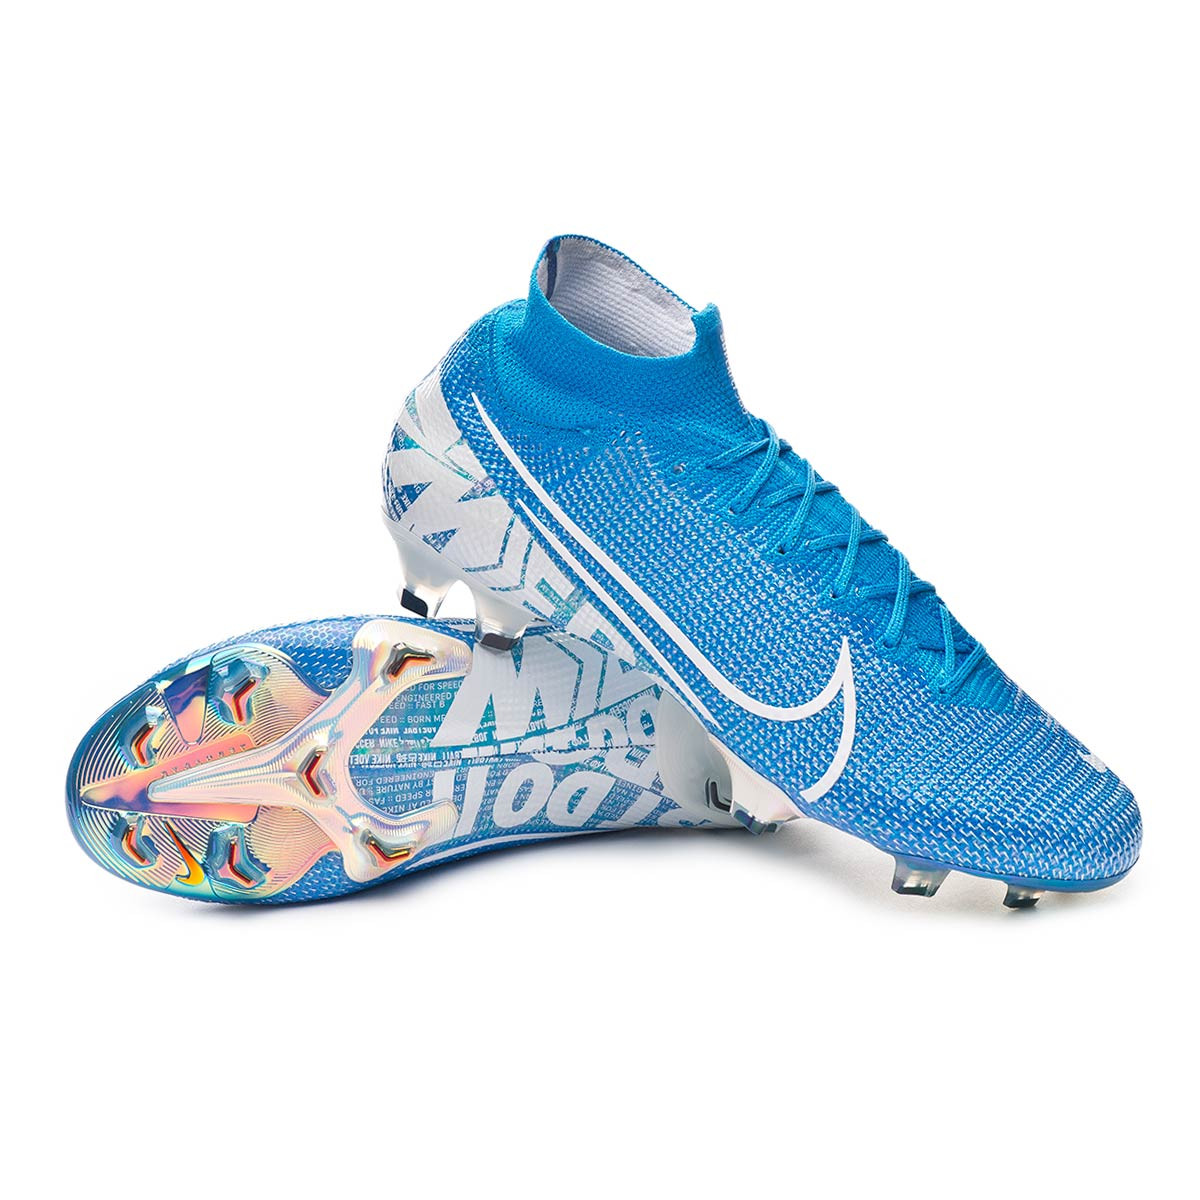 Football Boots Nike Mercurial Superfly VII Elite FG Blue  hero-White-Volt-Obsidian - Football store Fútbol Emotion